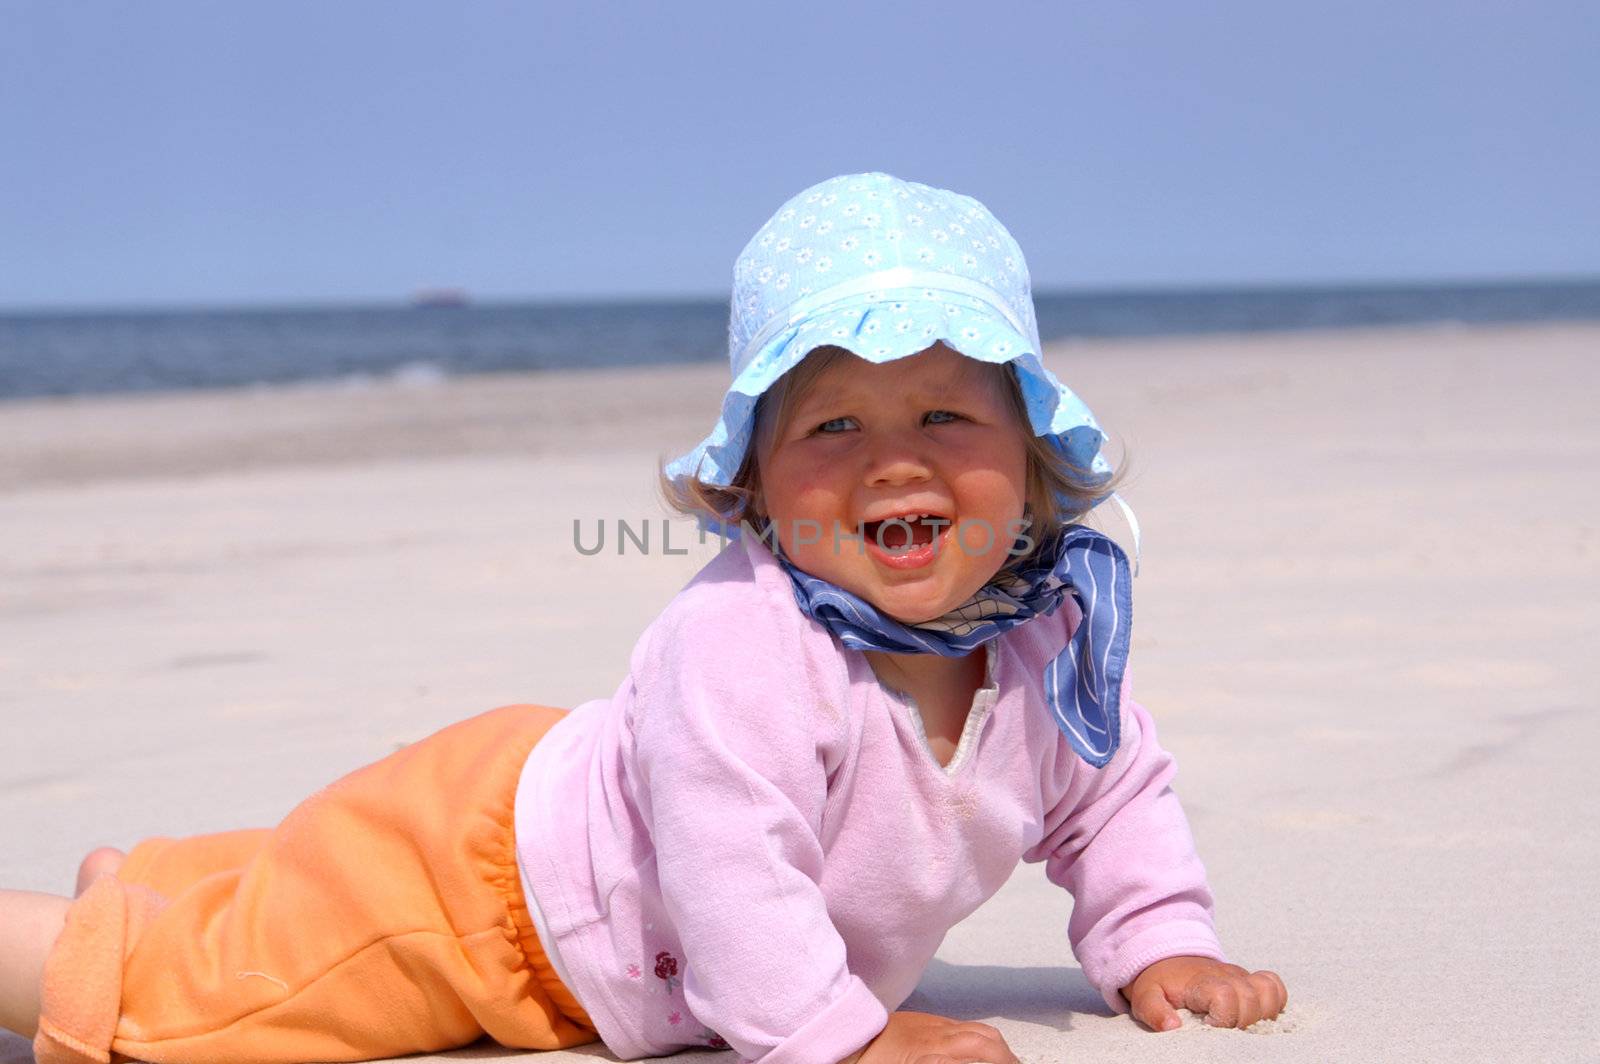 baby on beach by Arkadiusz